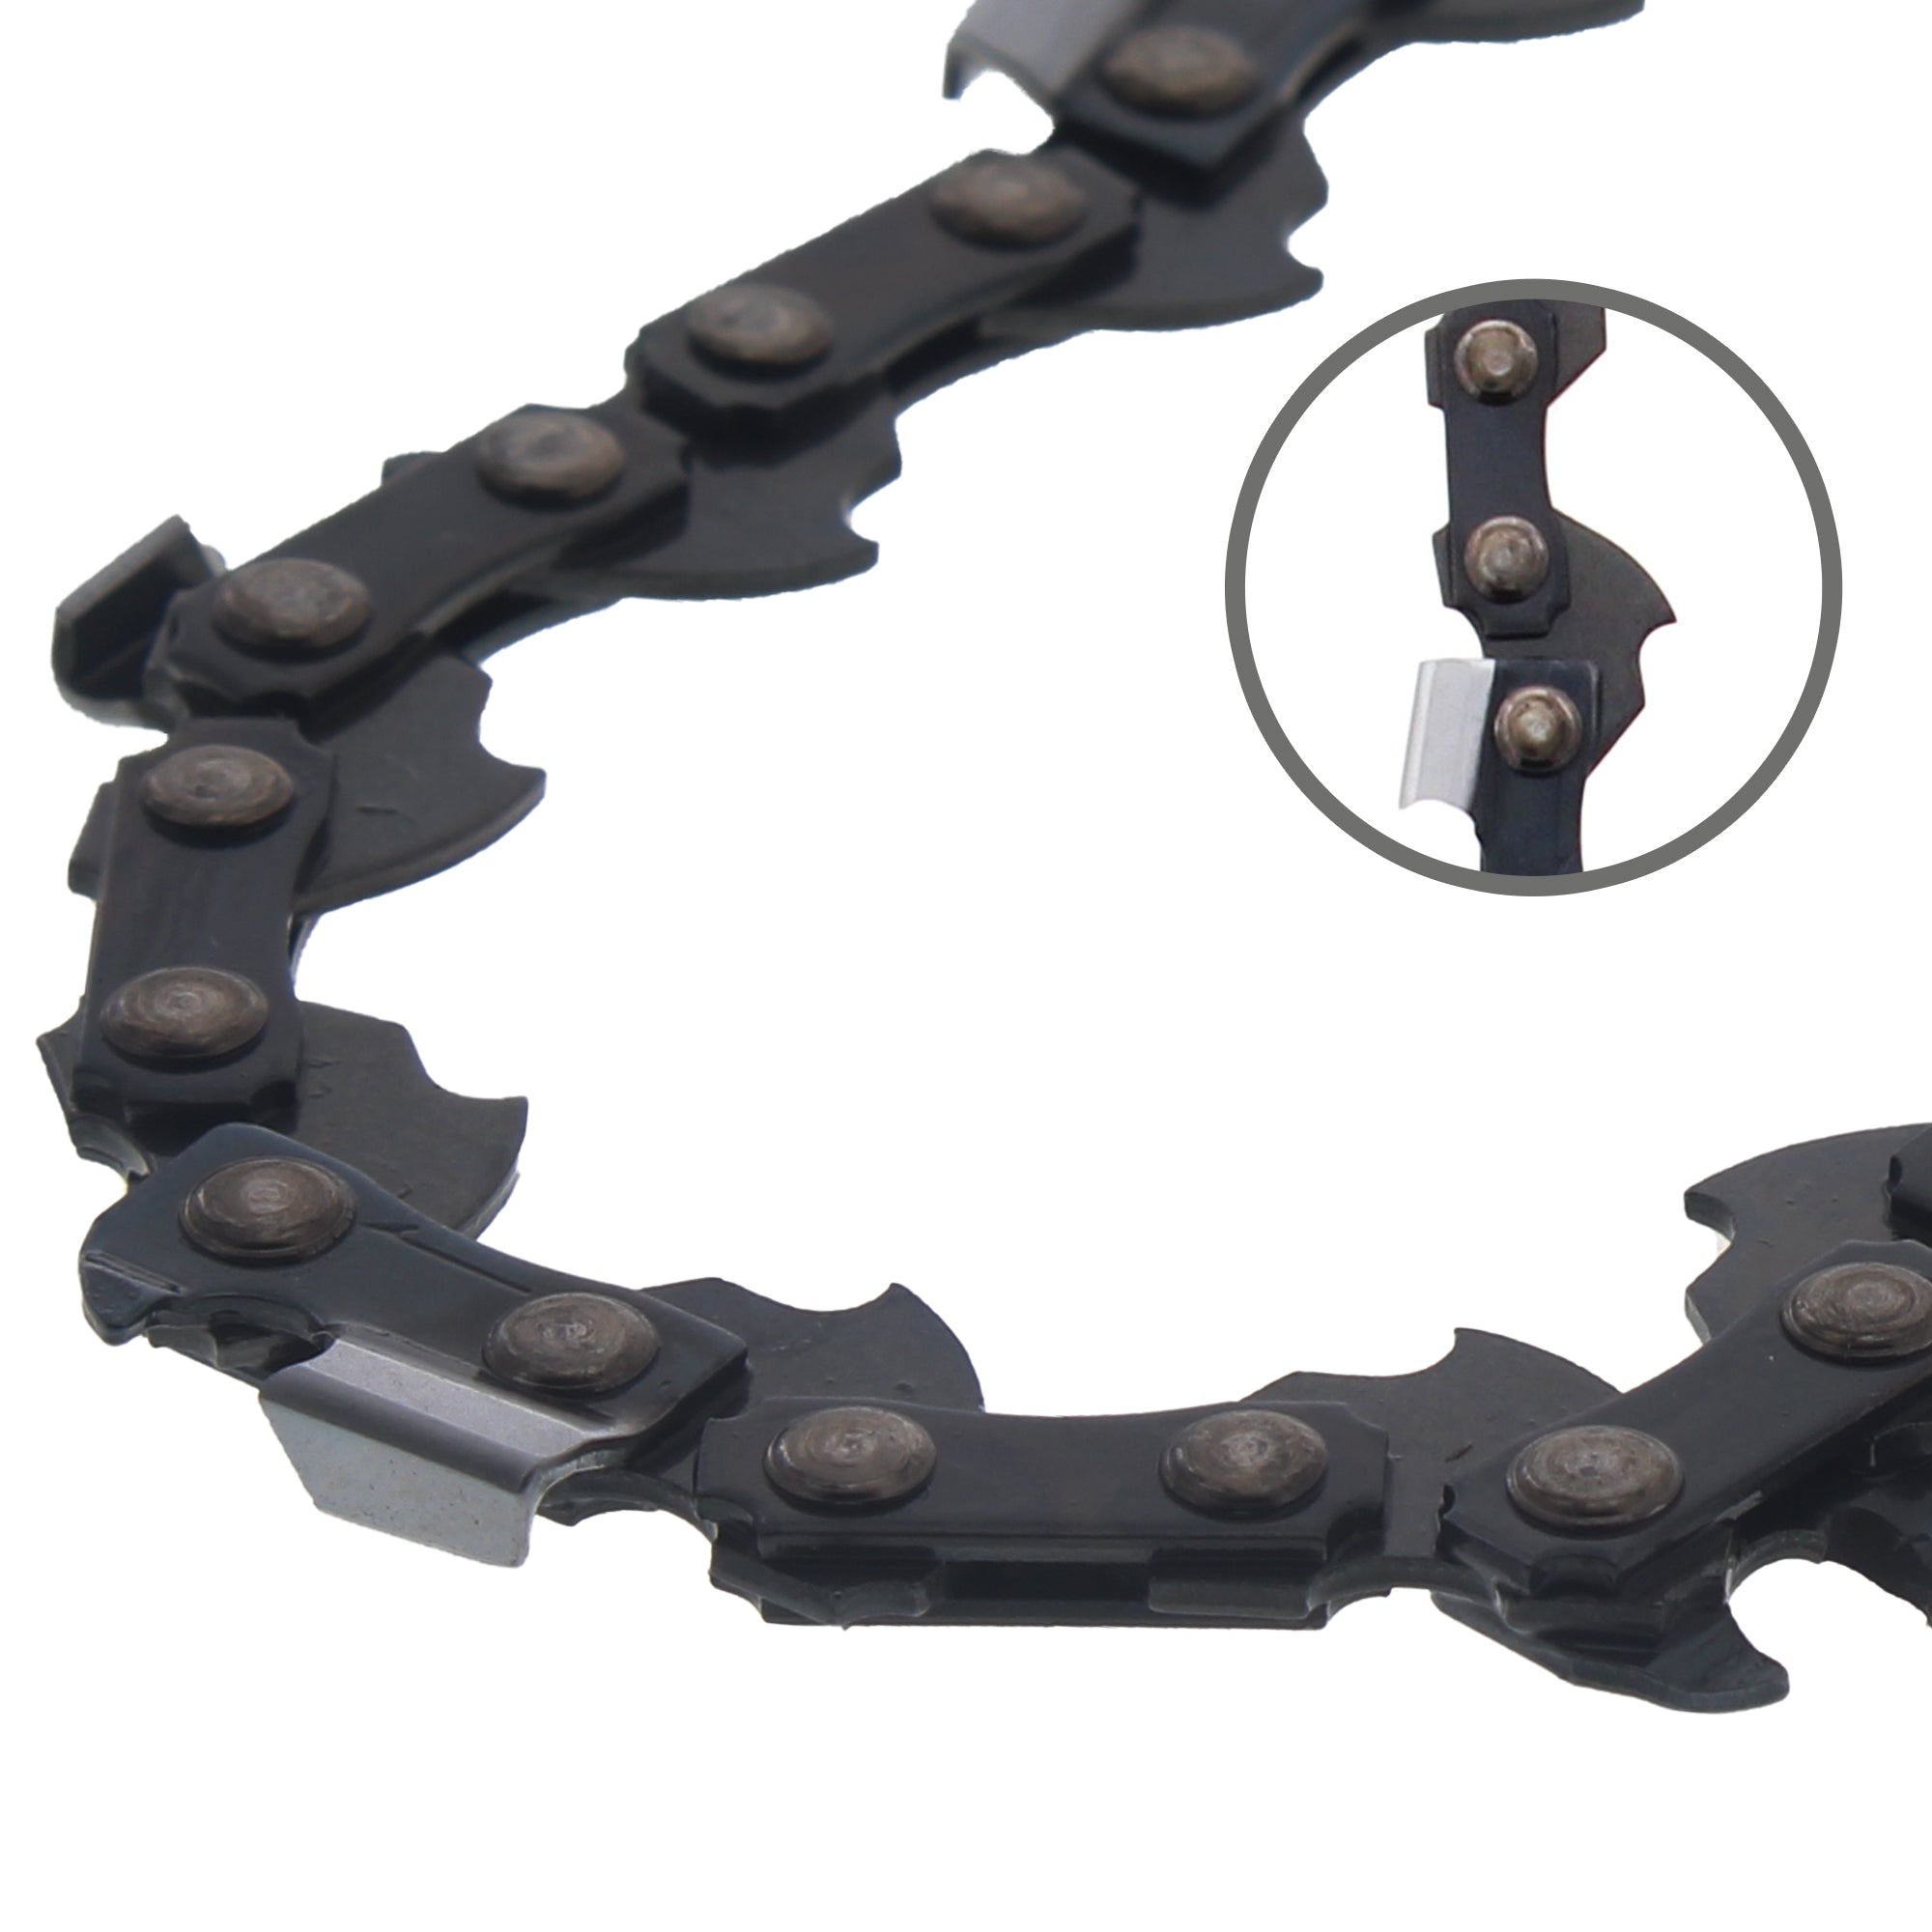 Chainsaw Chain Bulk Reel Semi Chisel 100 Foot .050 3/8 Pitch Low Profile